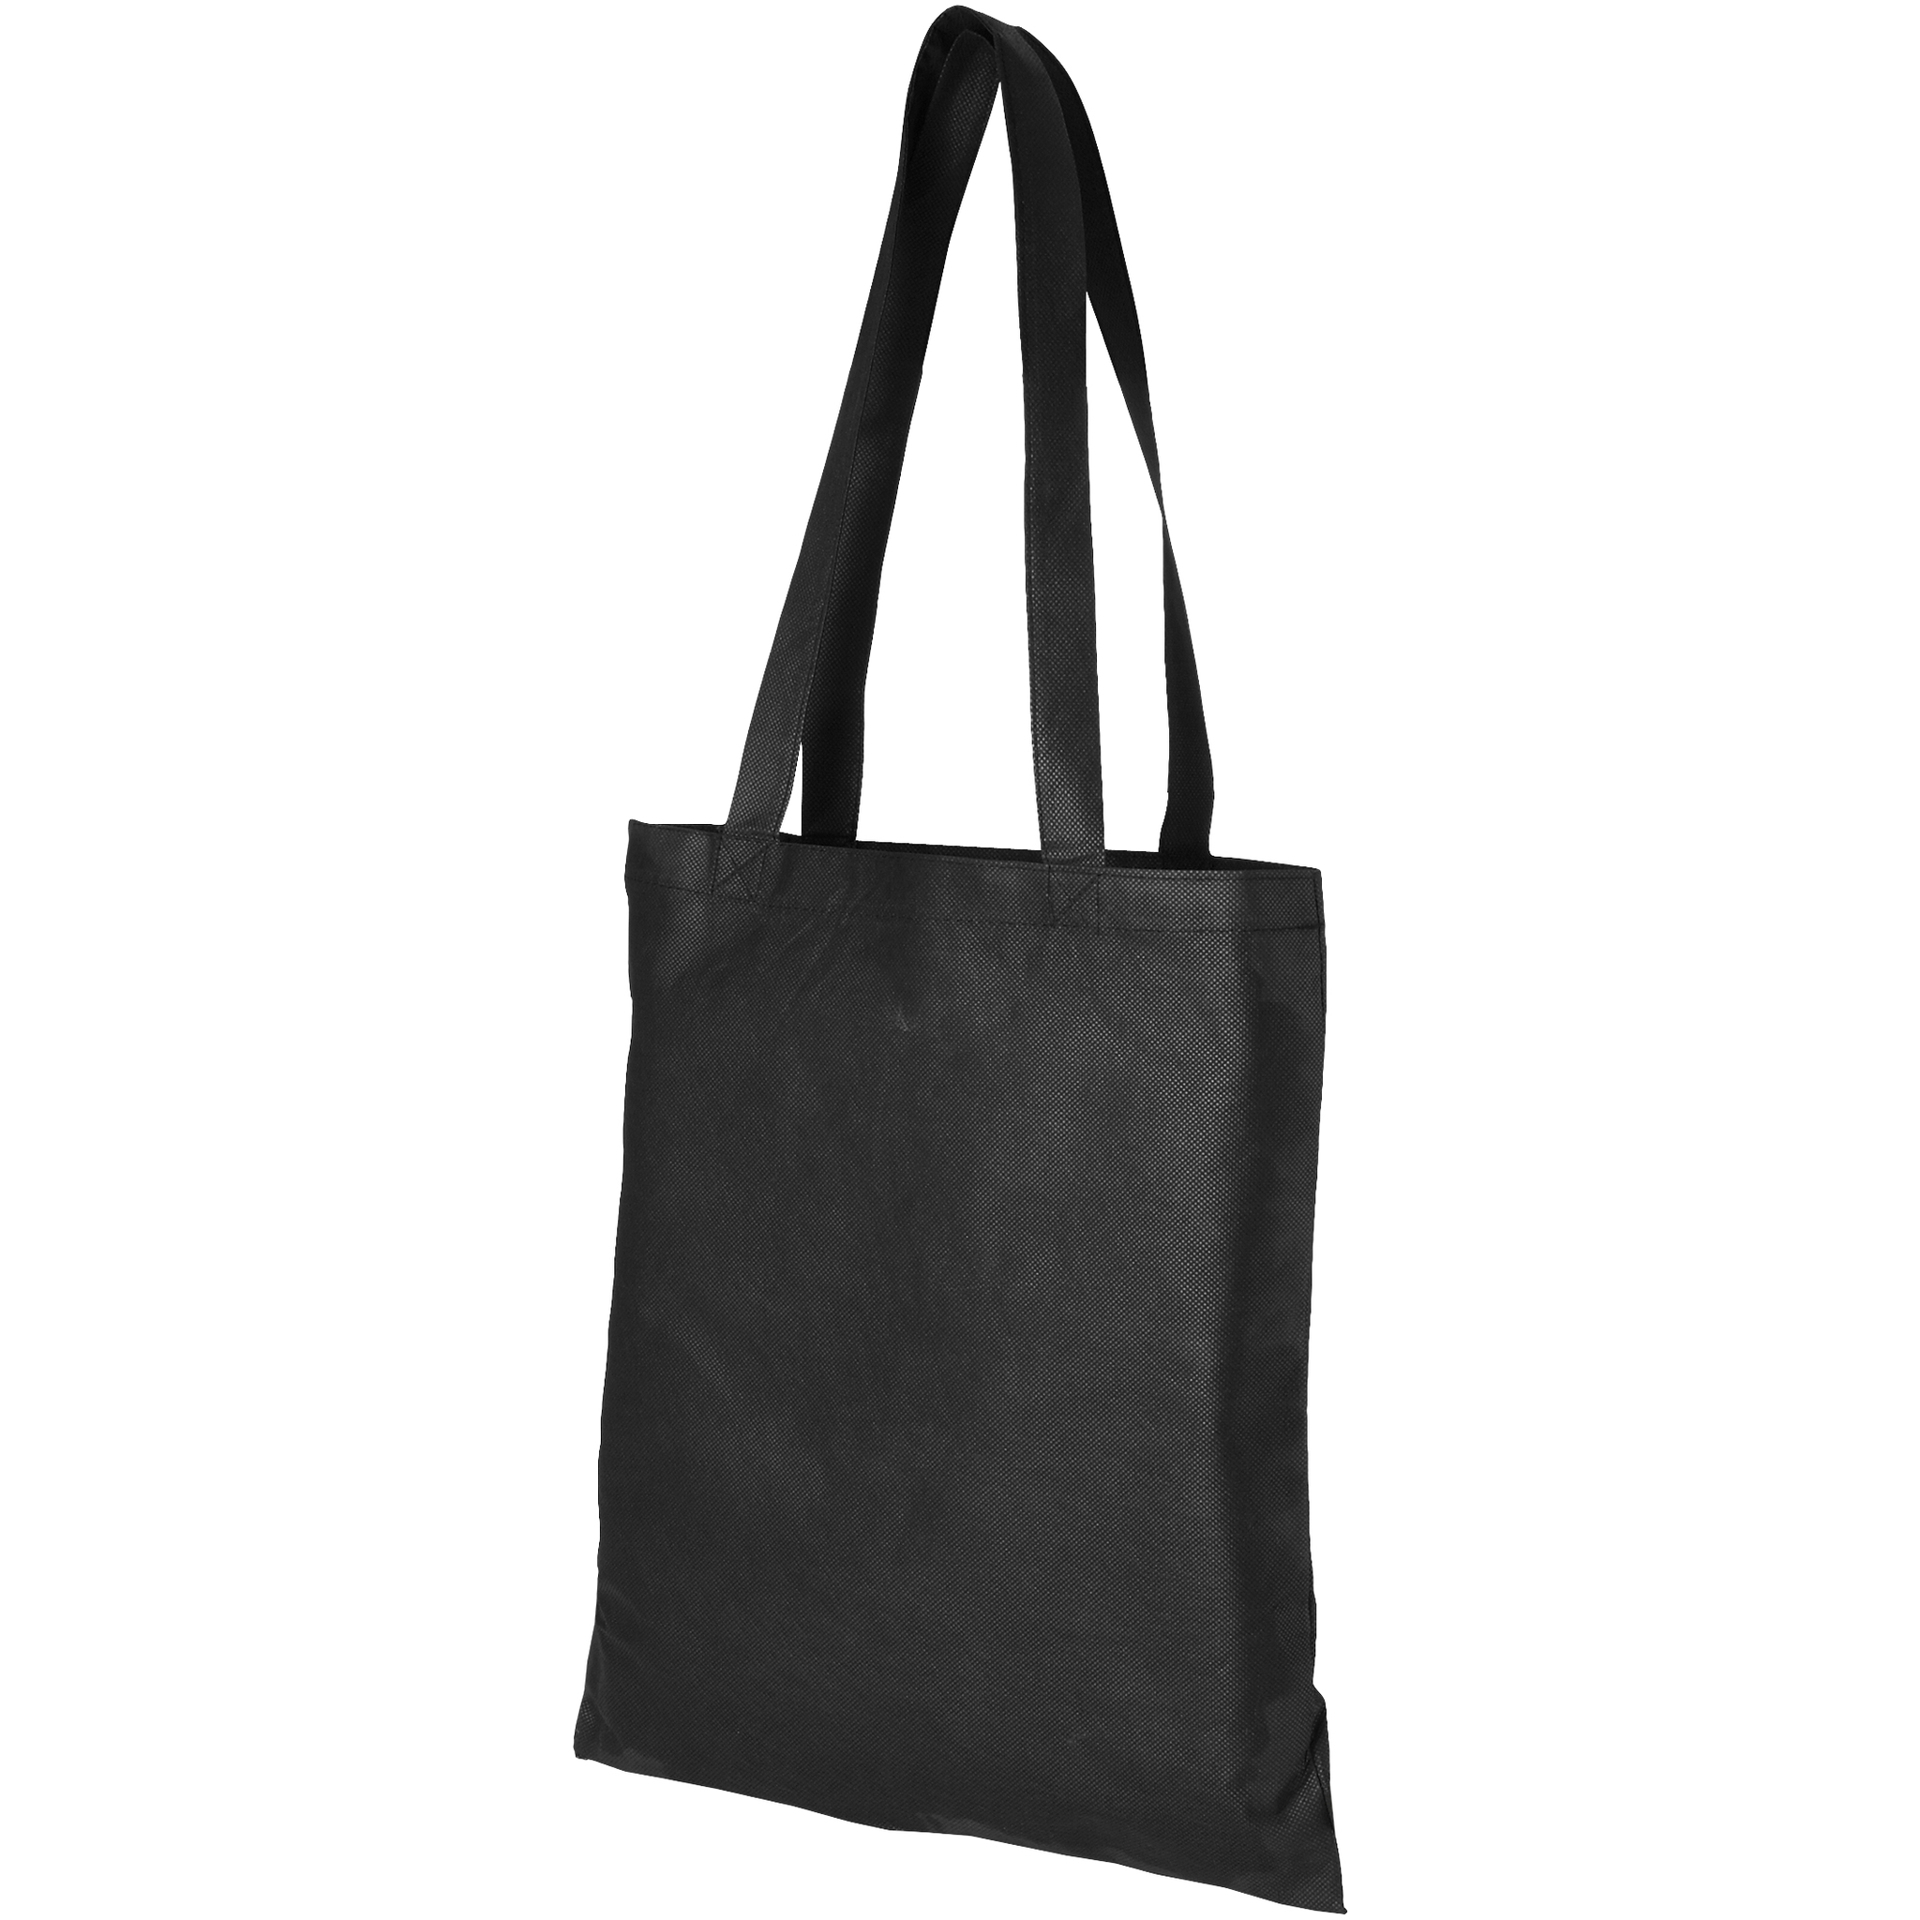 Black non-woven tote shopping bag with long handles